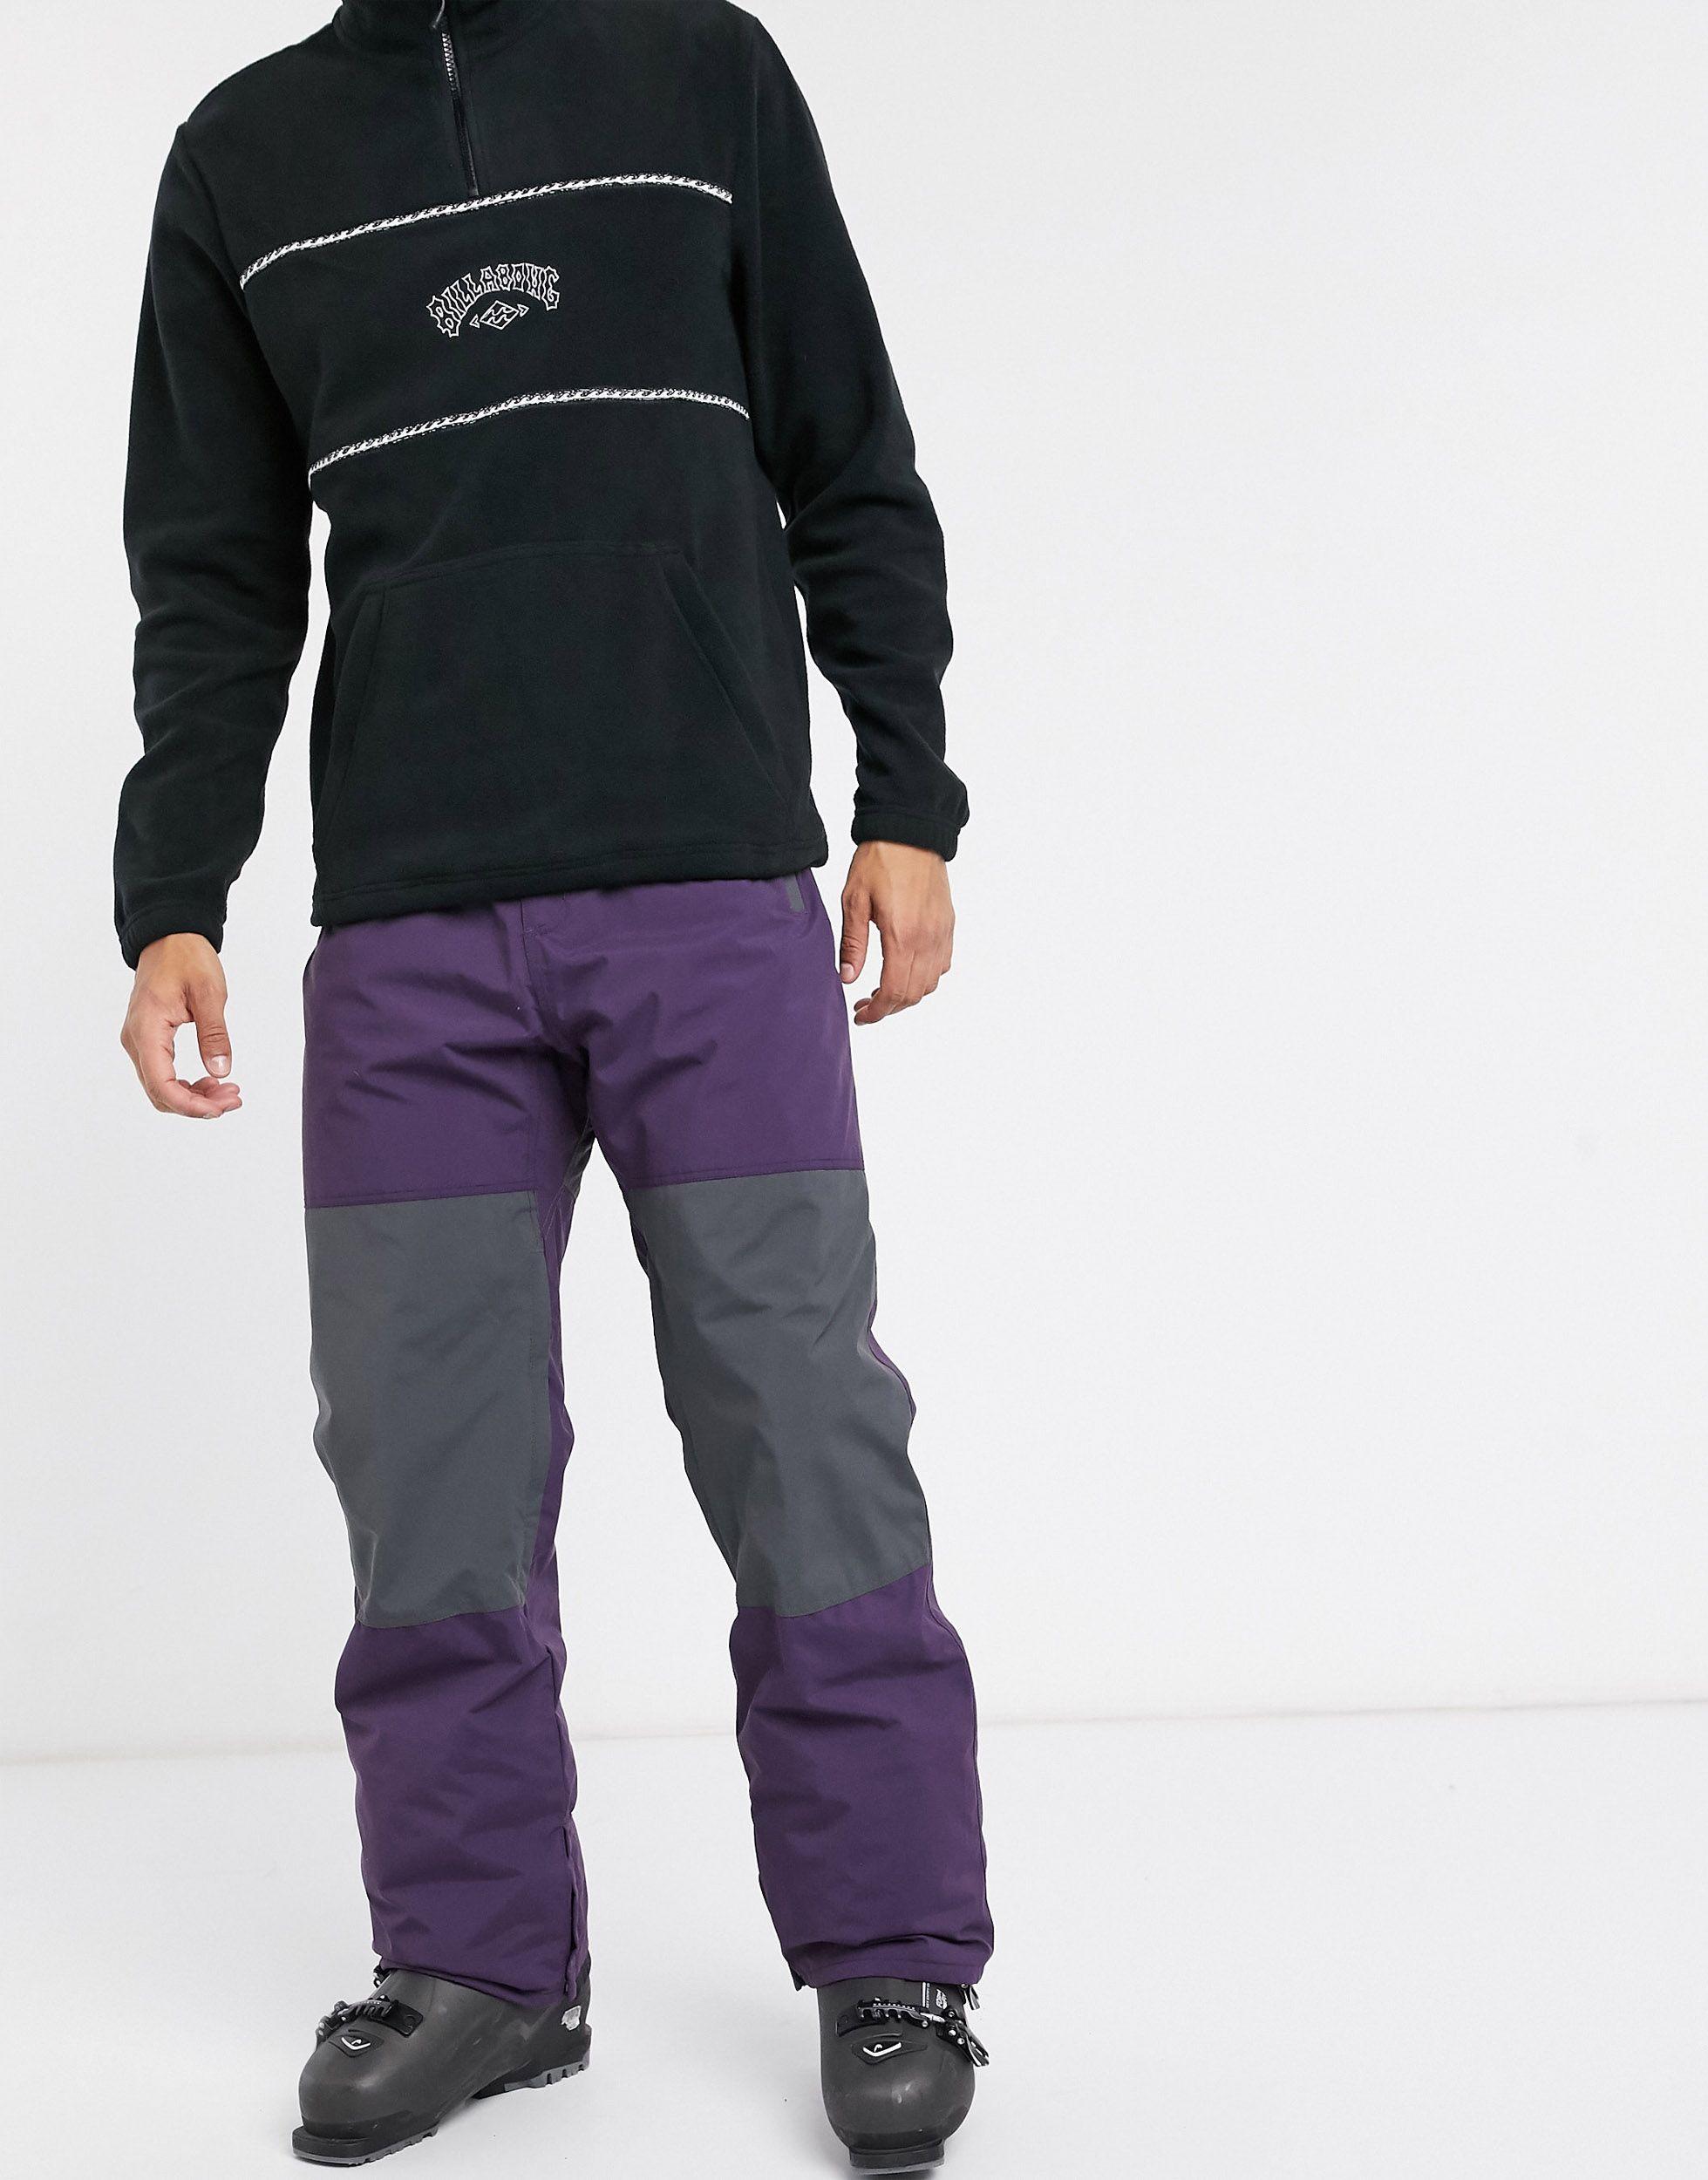 Billabong Lace Tuck Knee Ski Pants in Purple for Men - Lyst